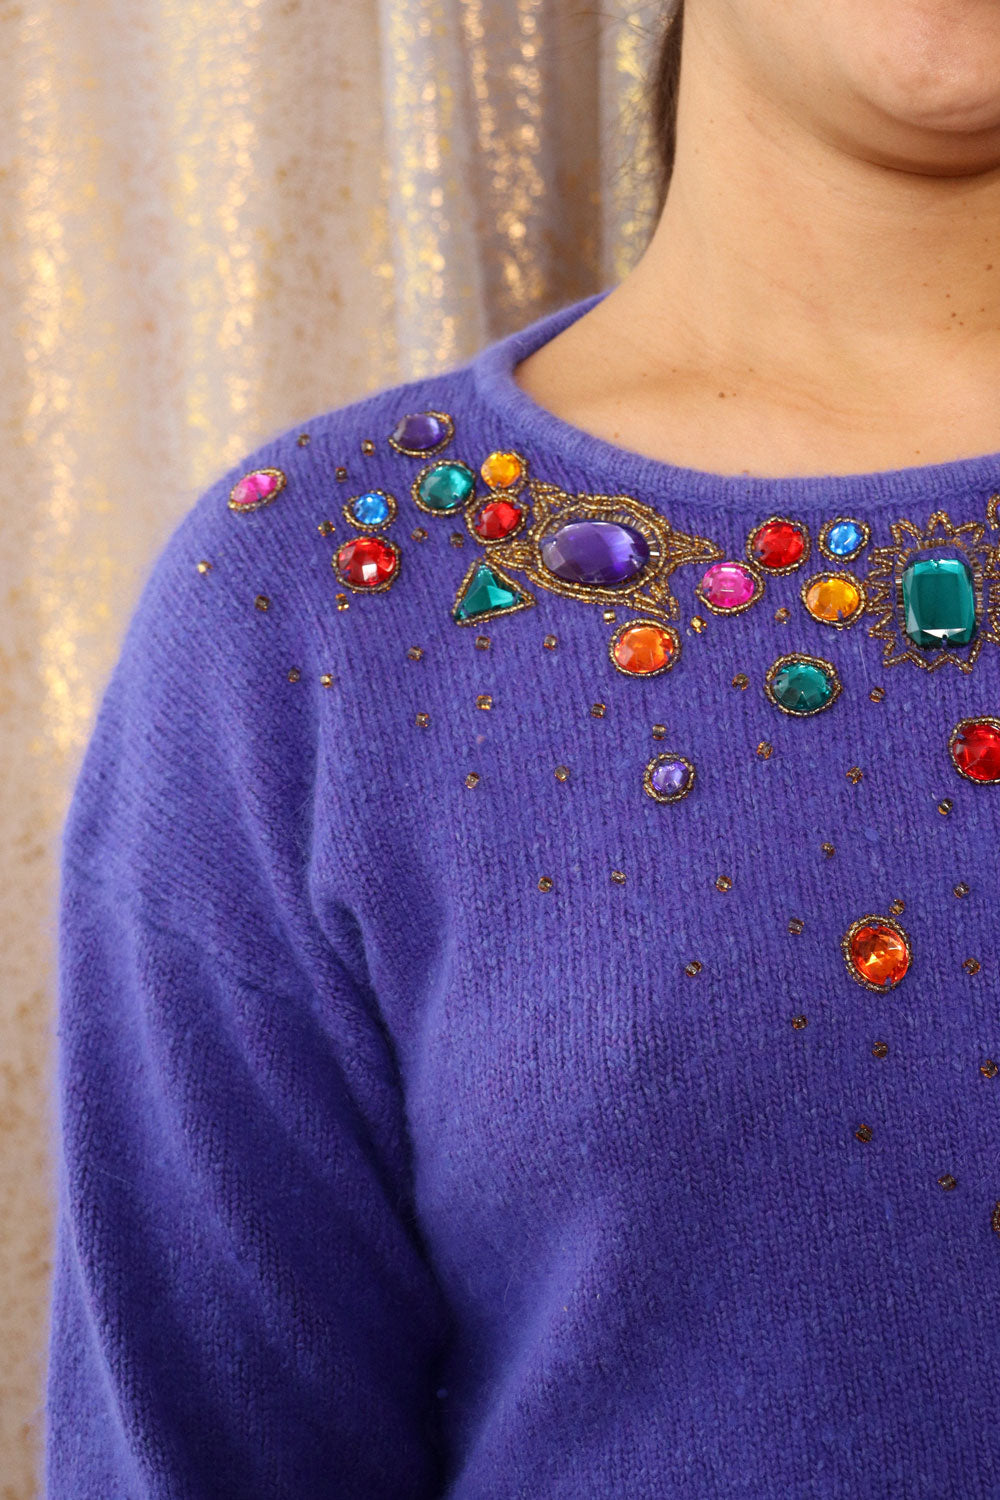 Bejeweled Violet Angora Sweater S-L